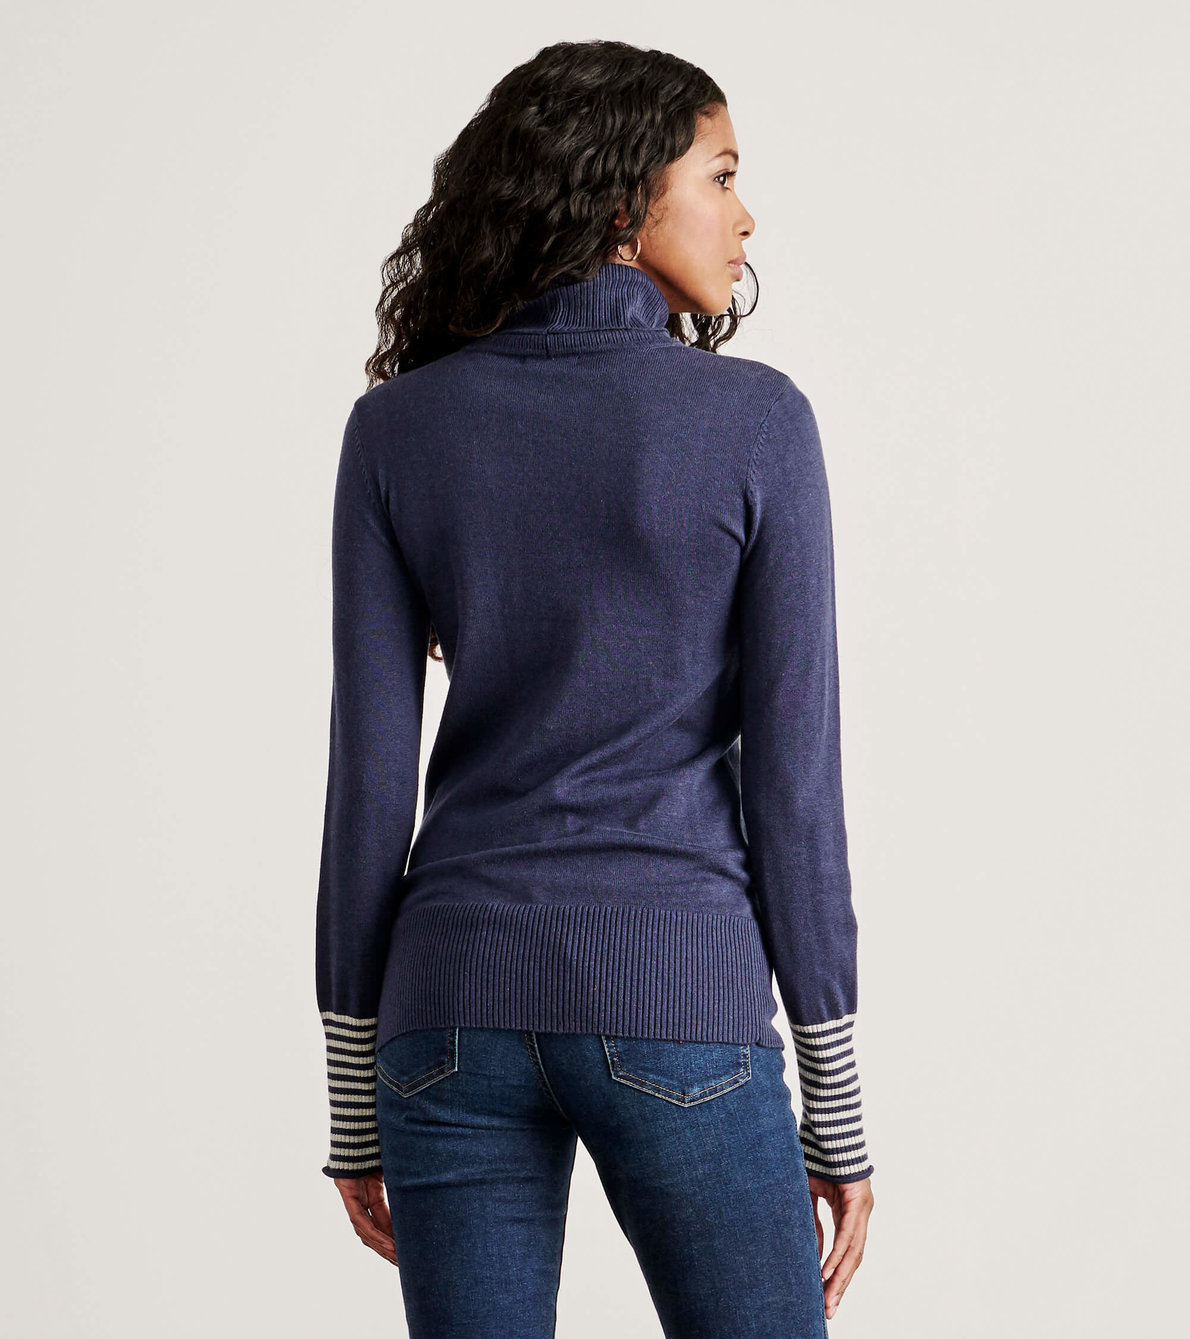 View larger image of Turtleneck Sweater - Patriot Blue